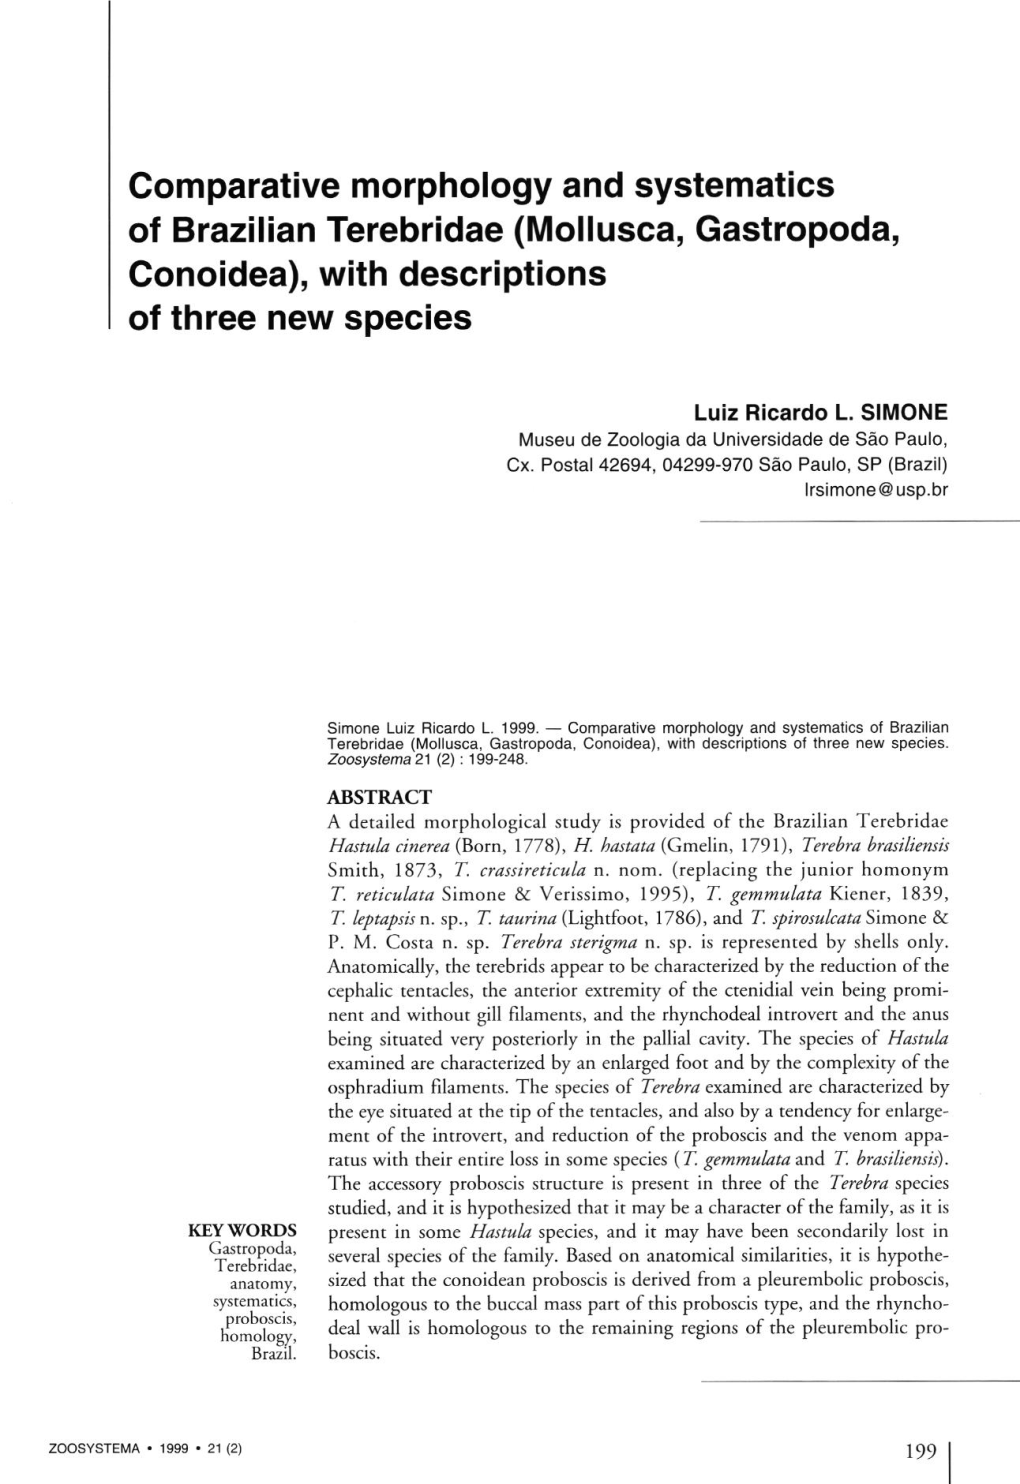 Comparative Morphology and Systematics of Brazilian Terebridae (Mollusca, Gastropoda, Conoidea), with Descriptions of Three New Species